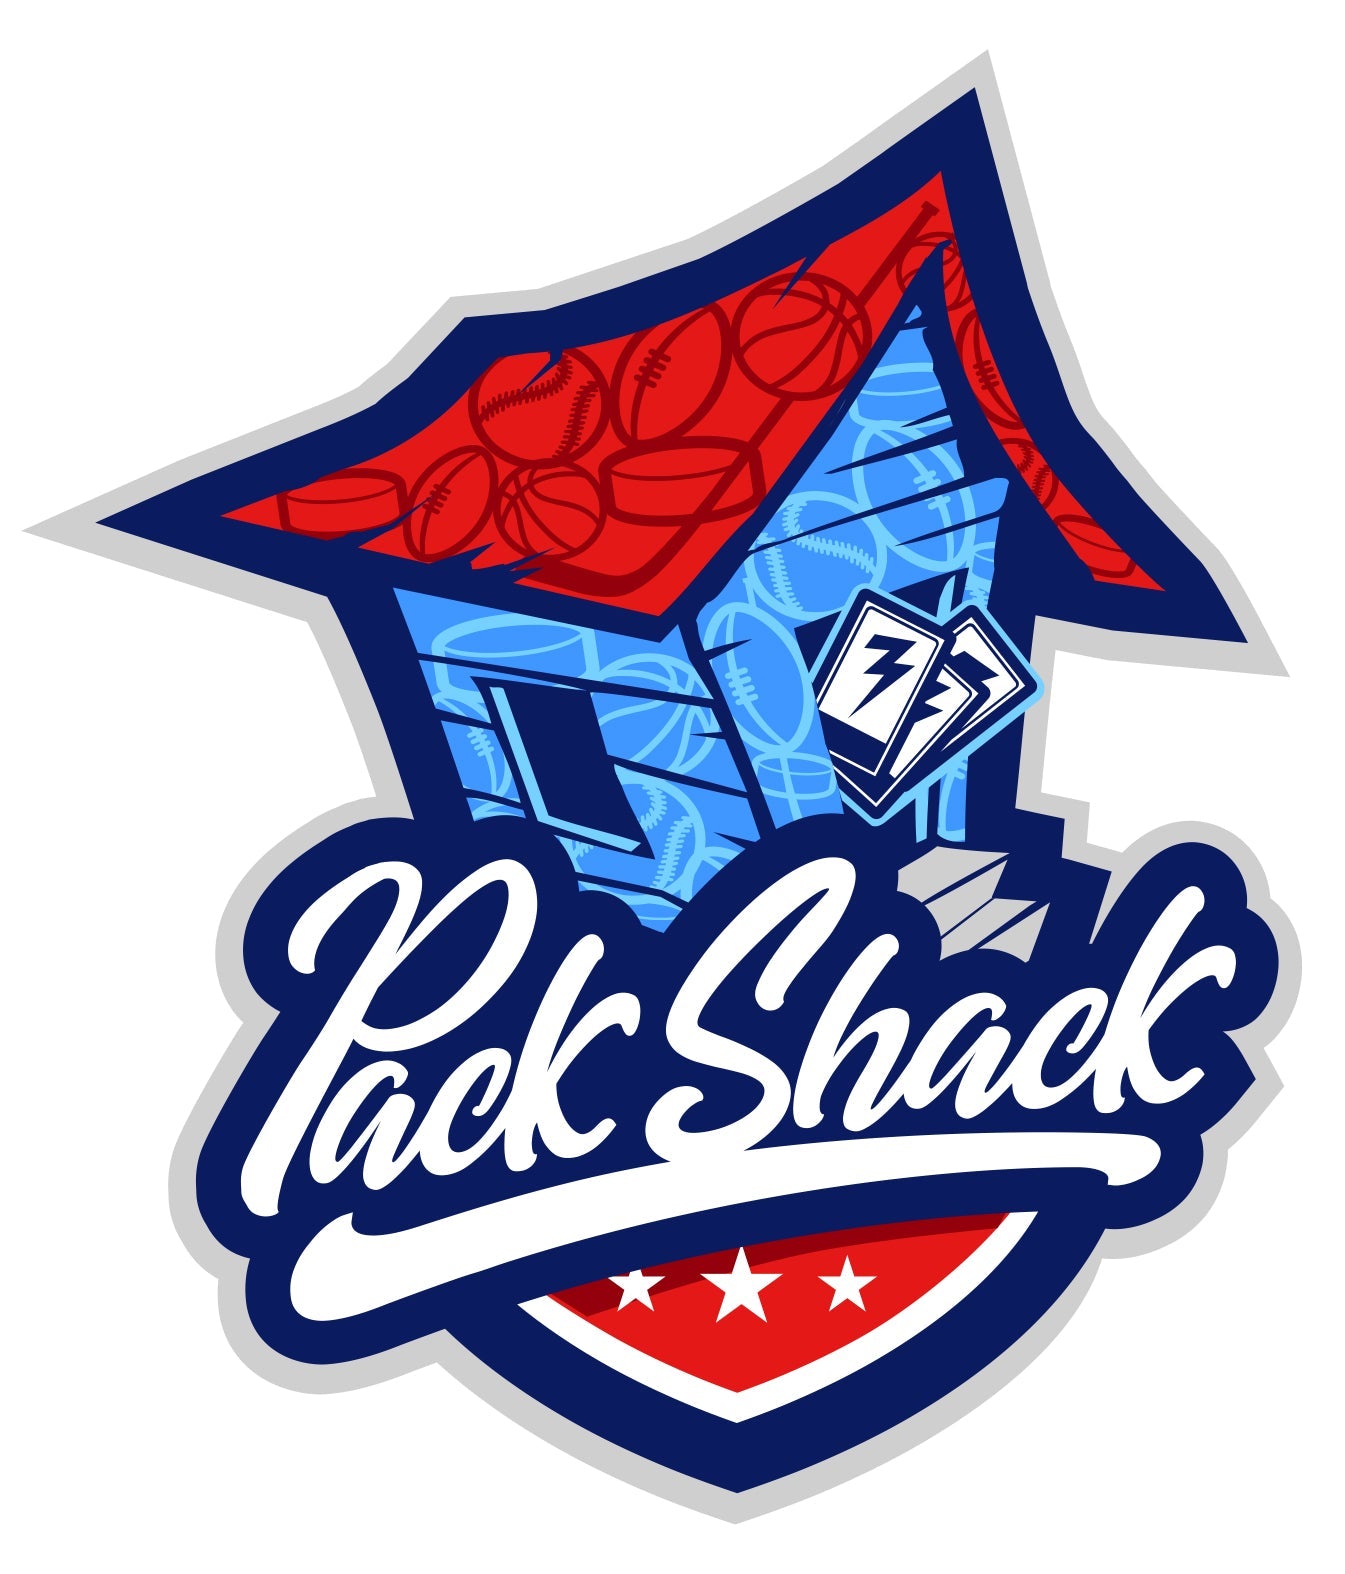 Pack Shack Fun Sticker - 3.5’ x 4’ - Merch